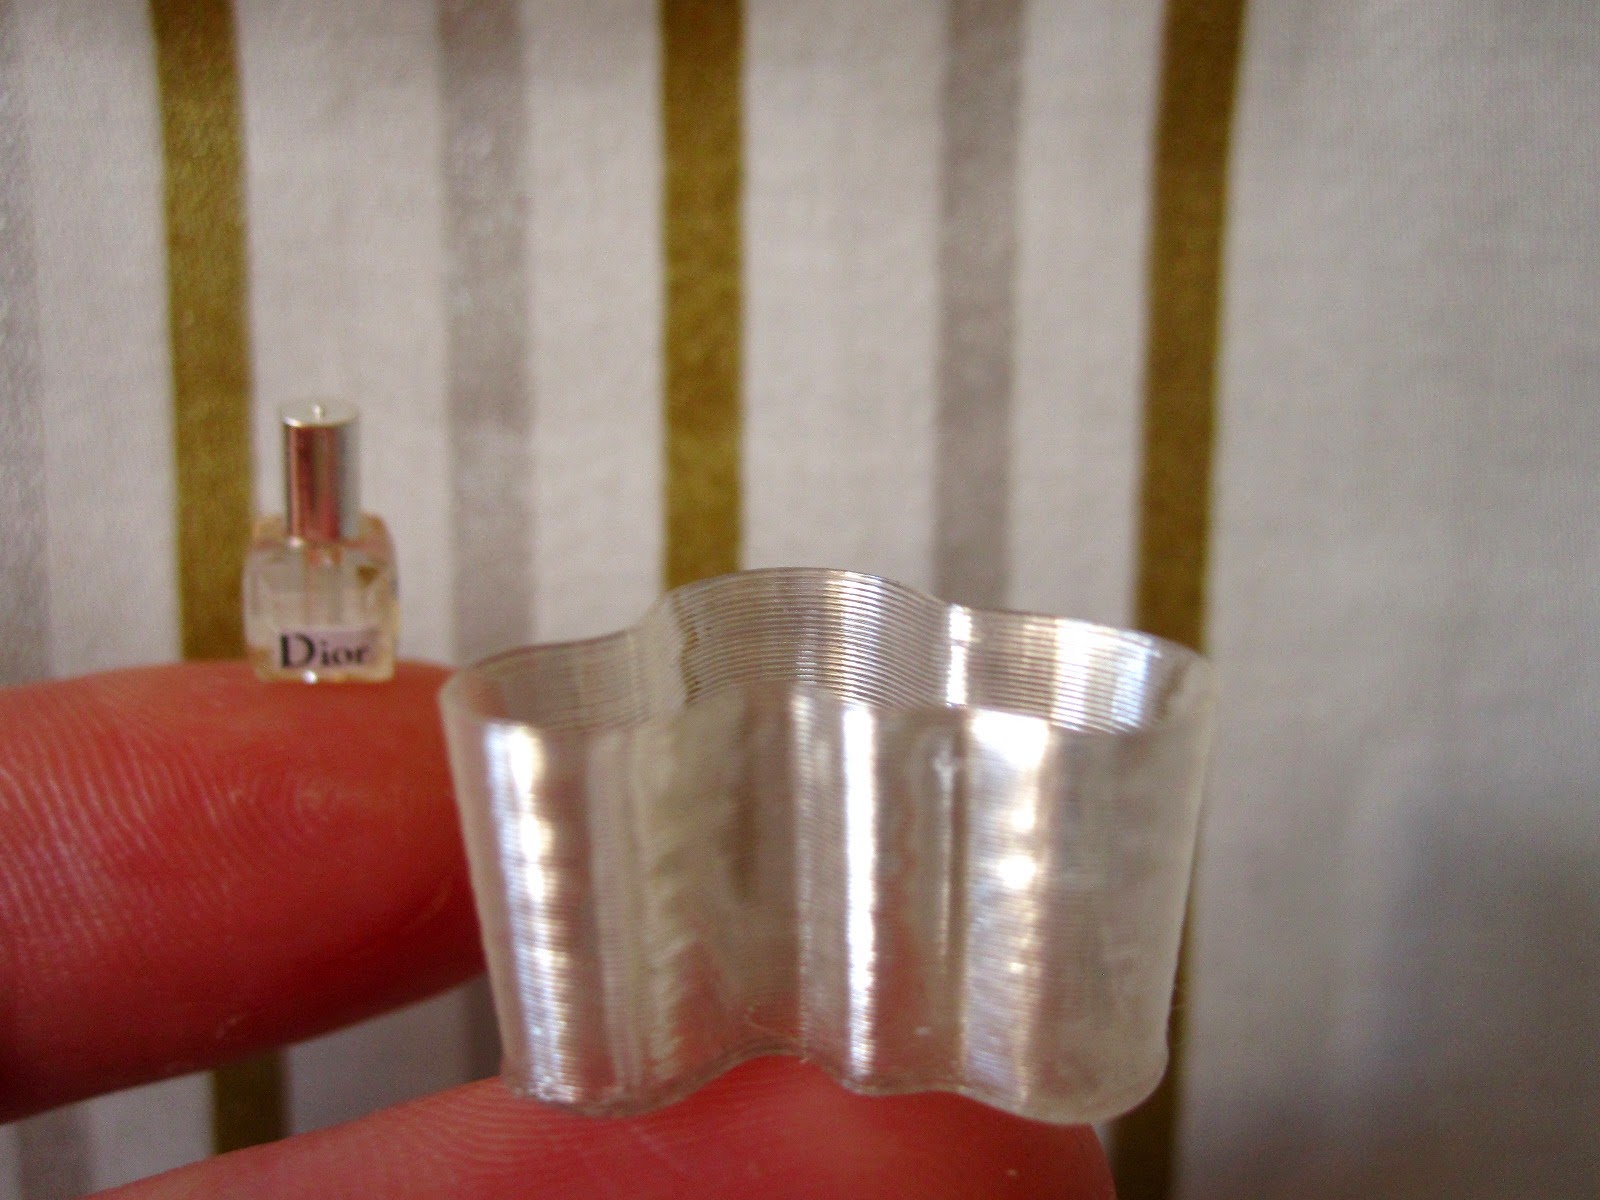 A miniature Dior perfume bottle and a miniature Aalto vase balanced on fingertips.